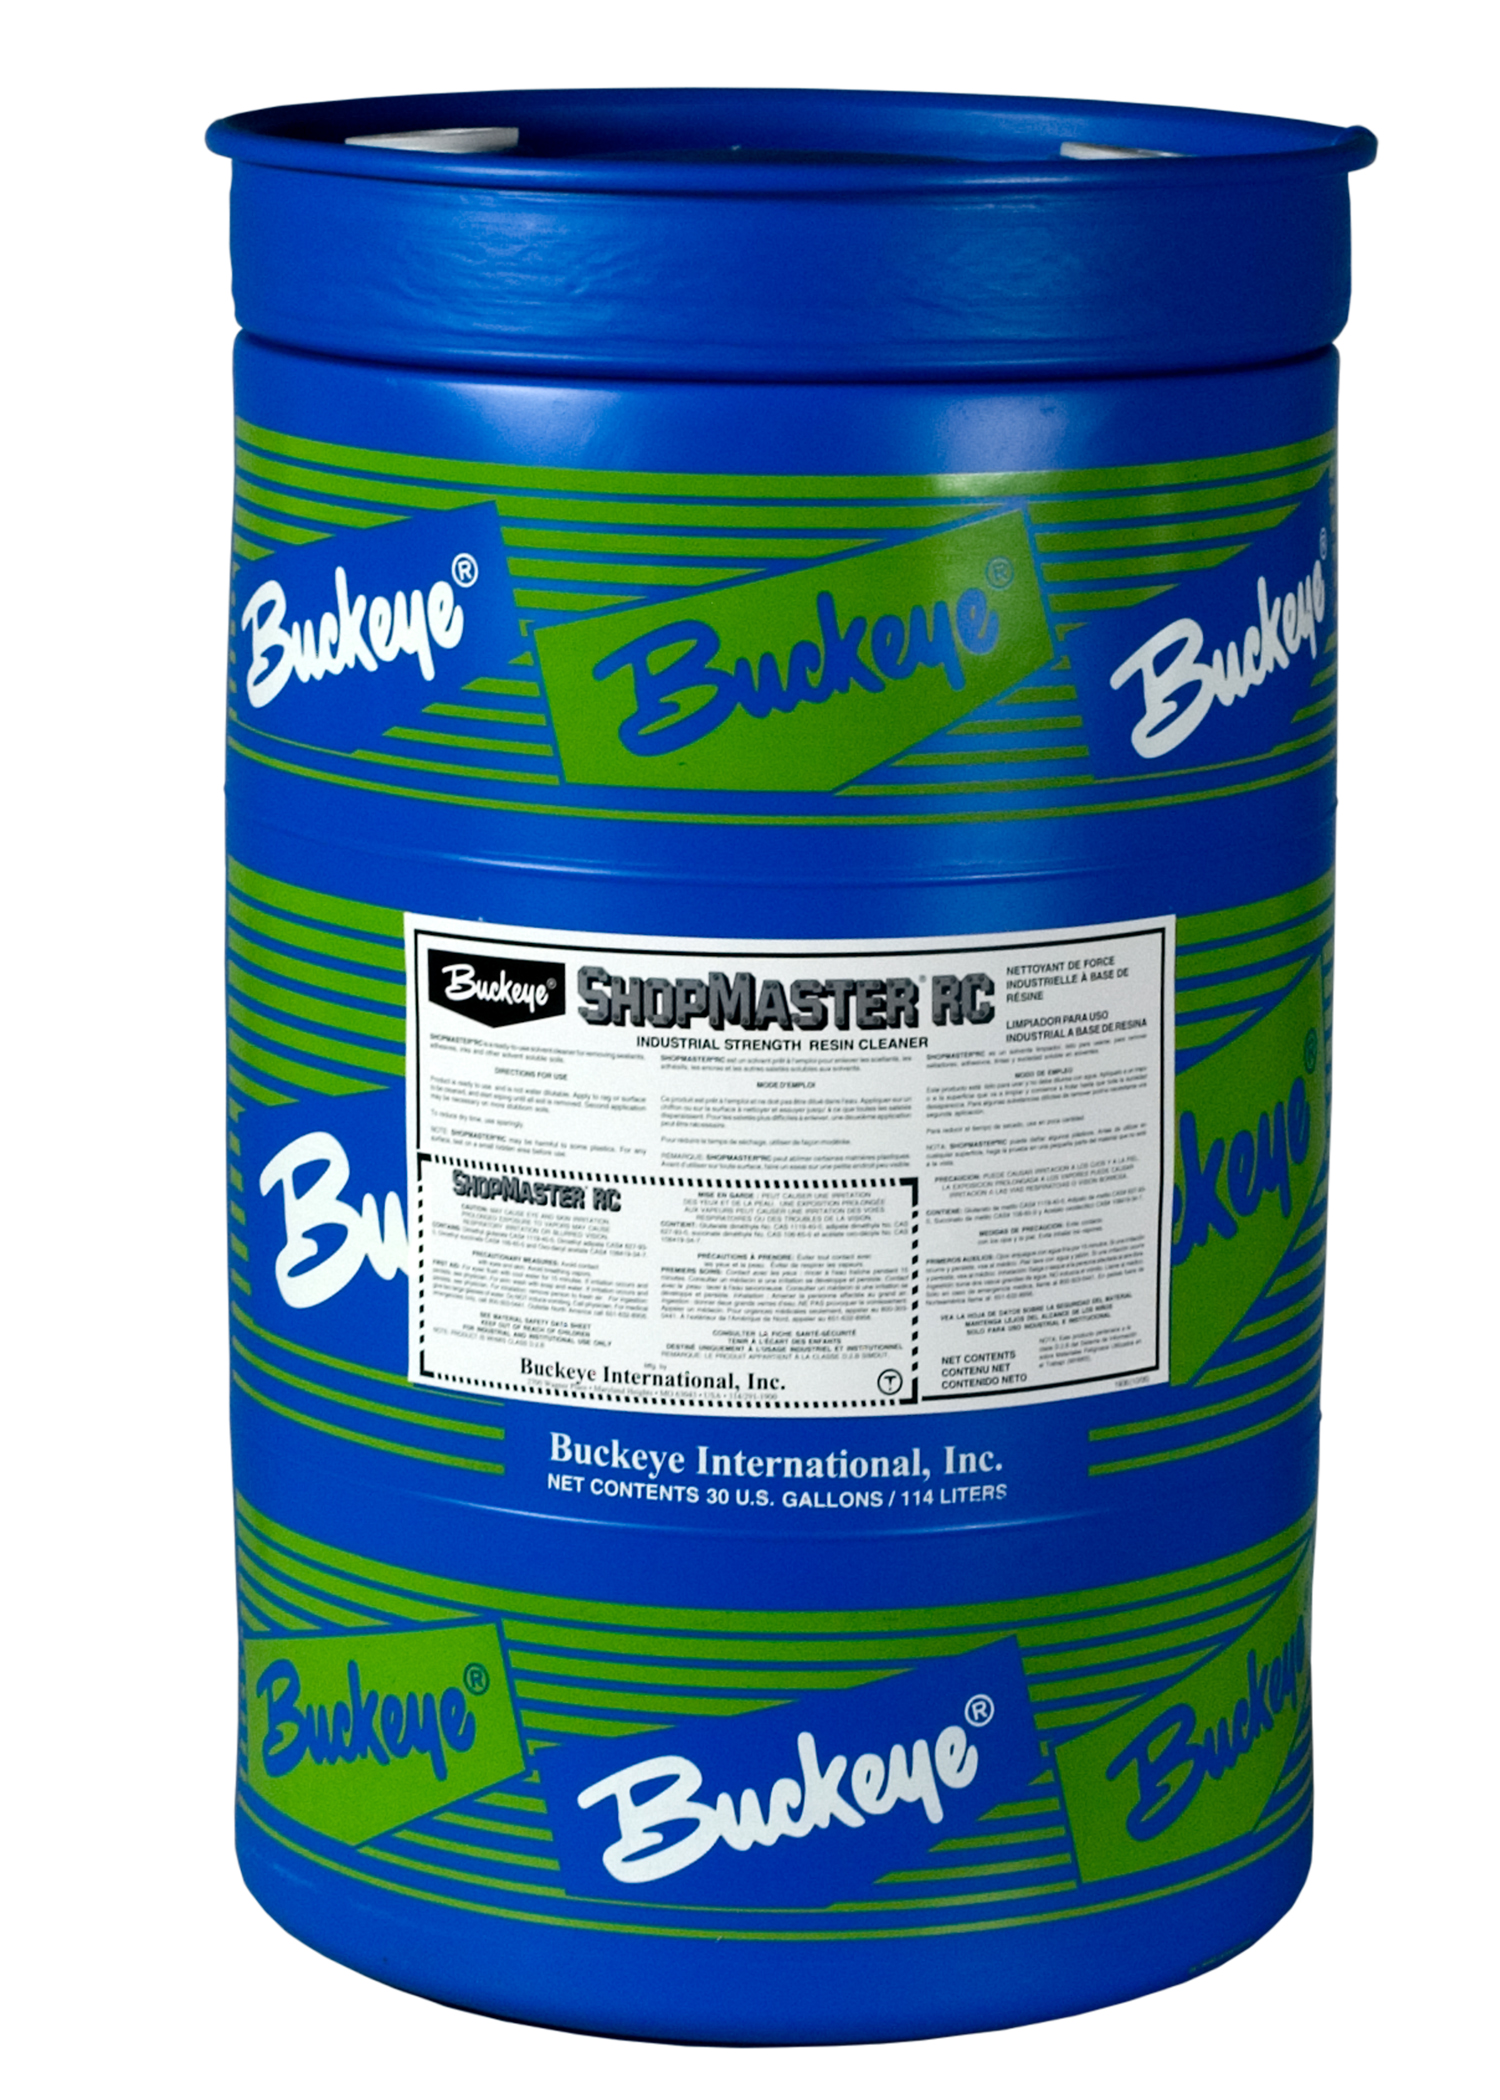 Buckeye Shopmaster RC 
Industrial Strength Resin 
Cleaner - (55gal)